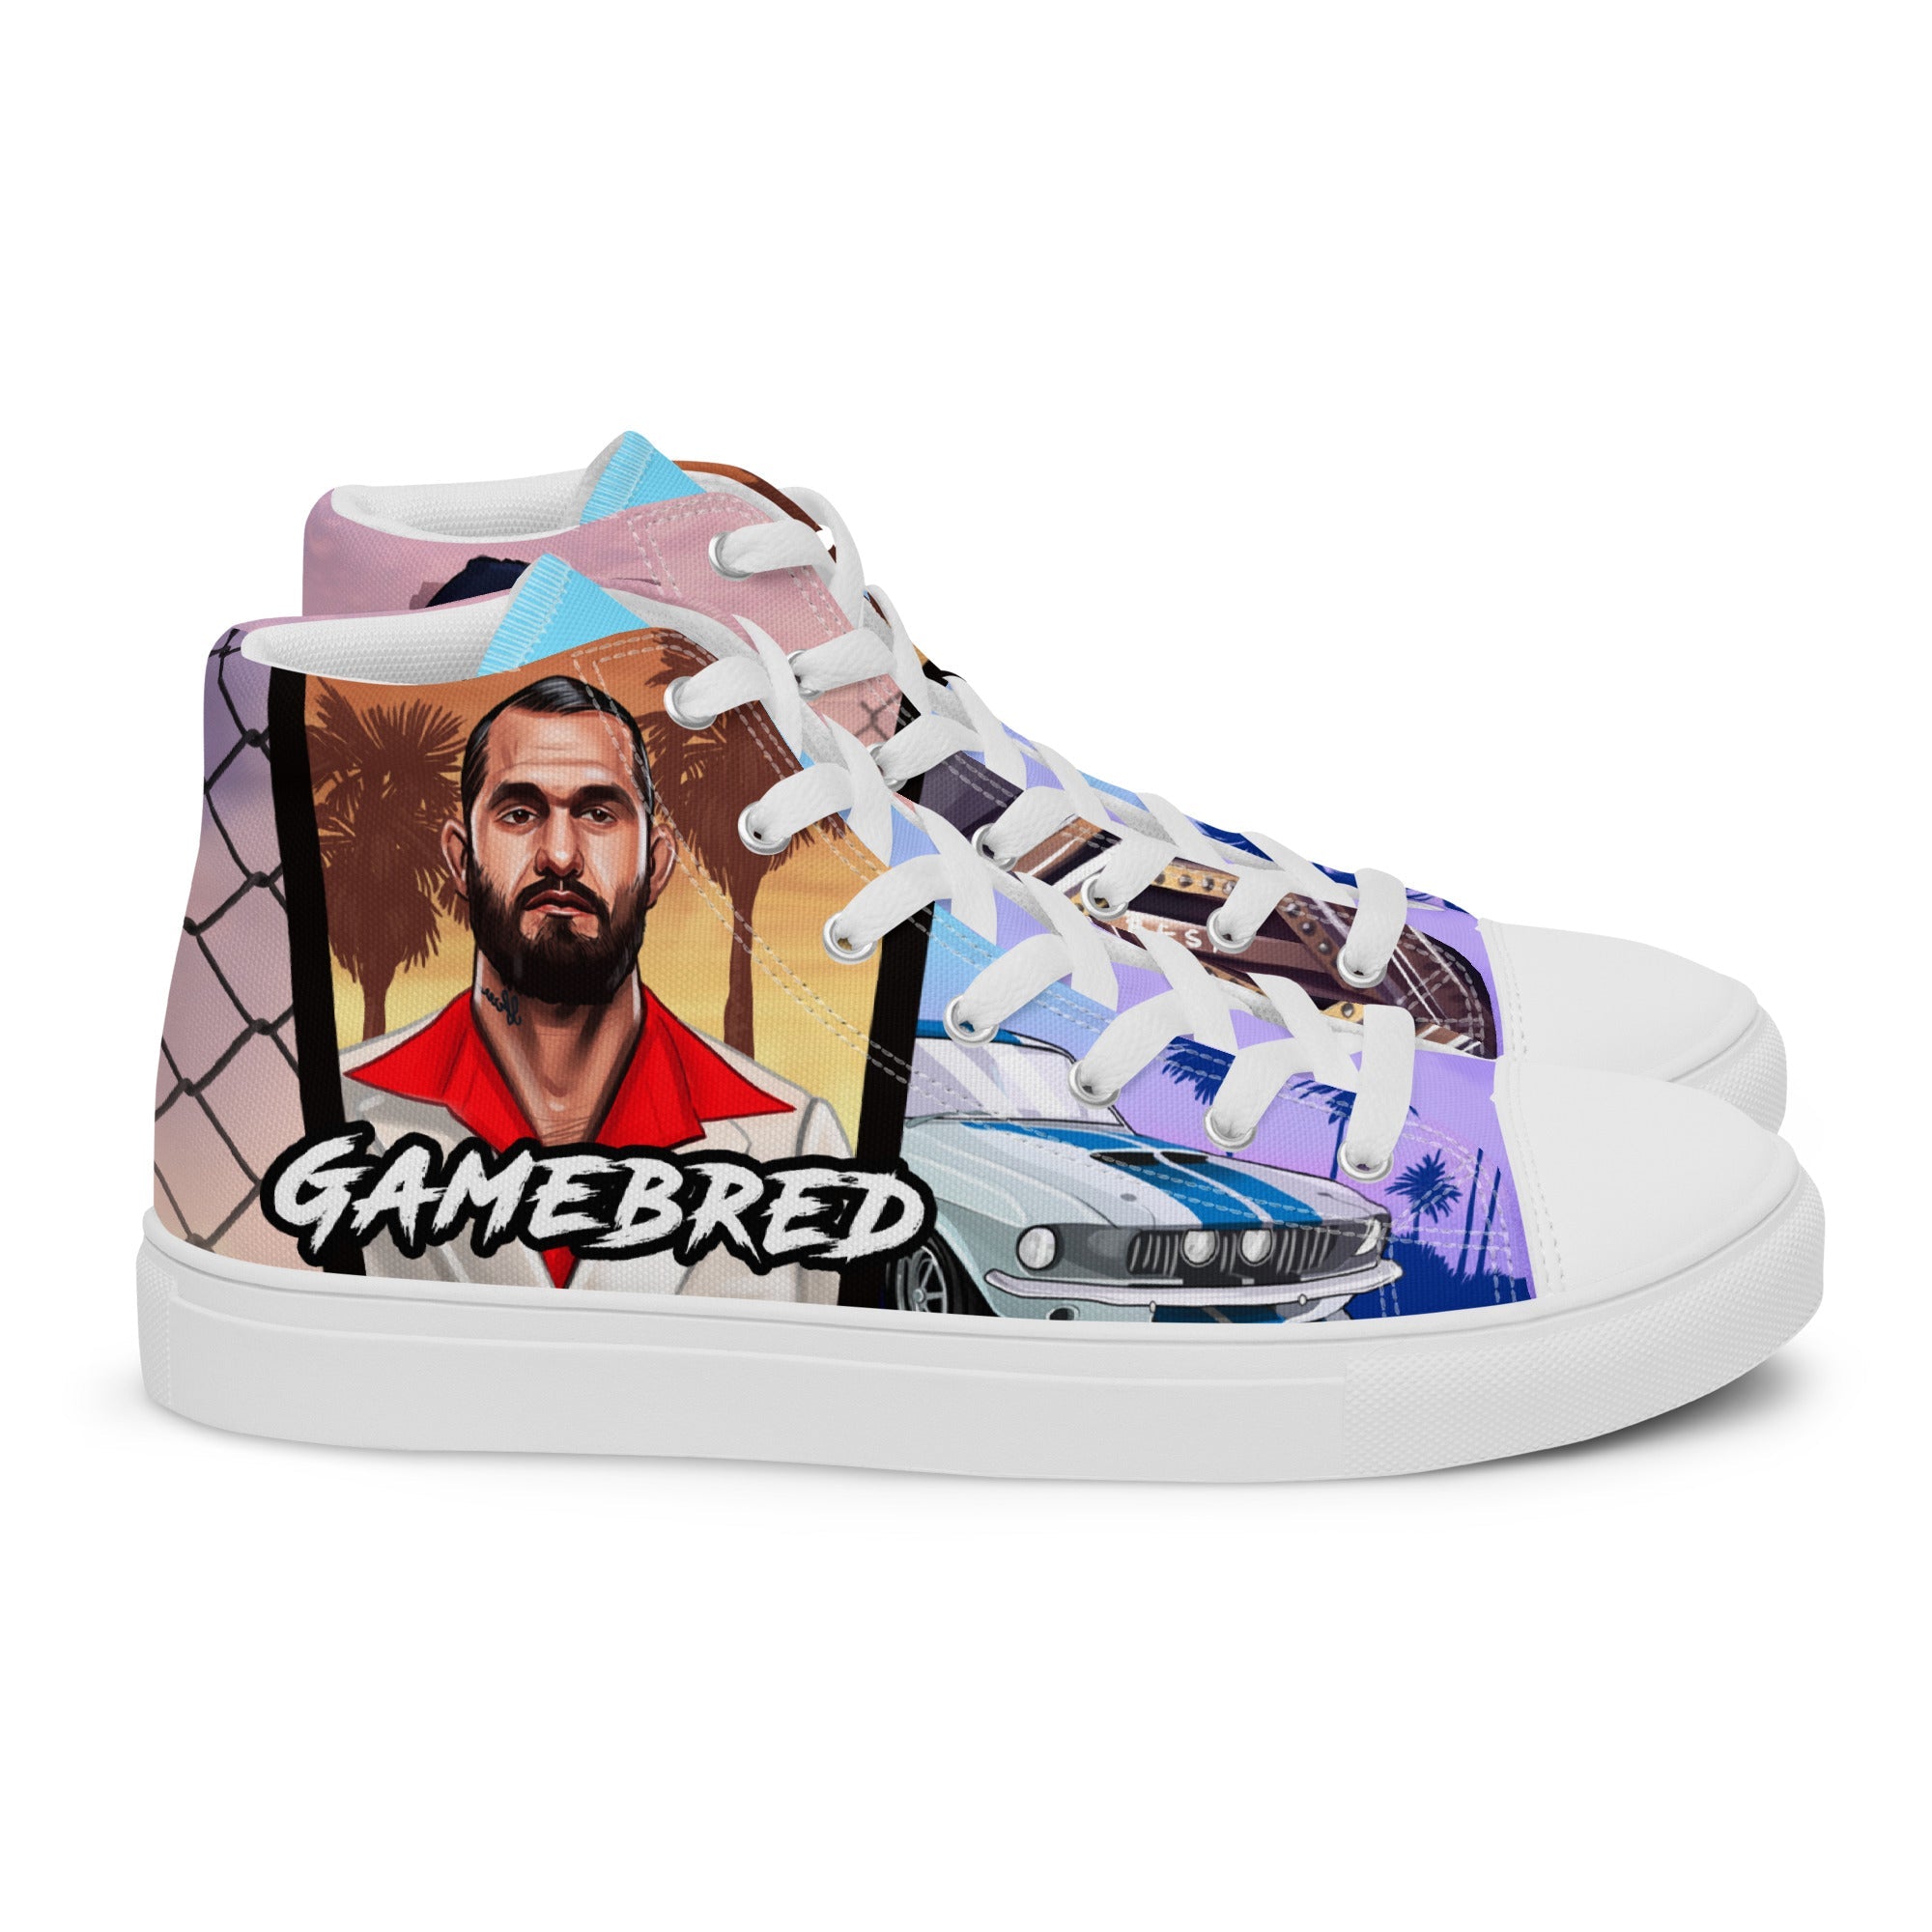 "Gamebred" Jorge Masvidal Shoe (Limited Edition) Shoes